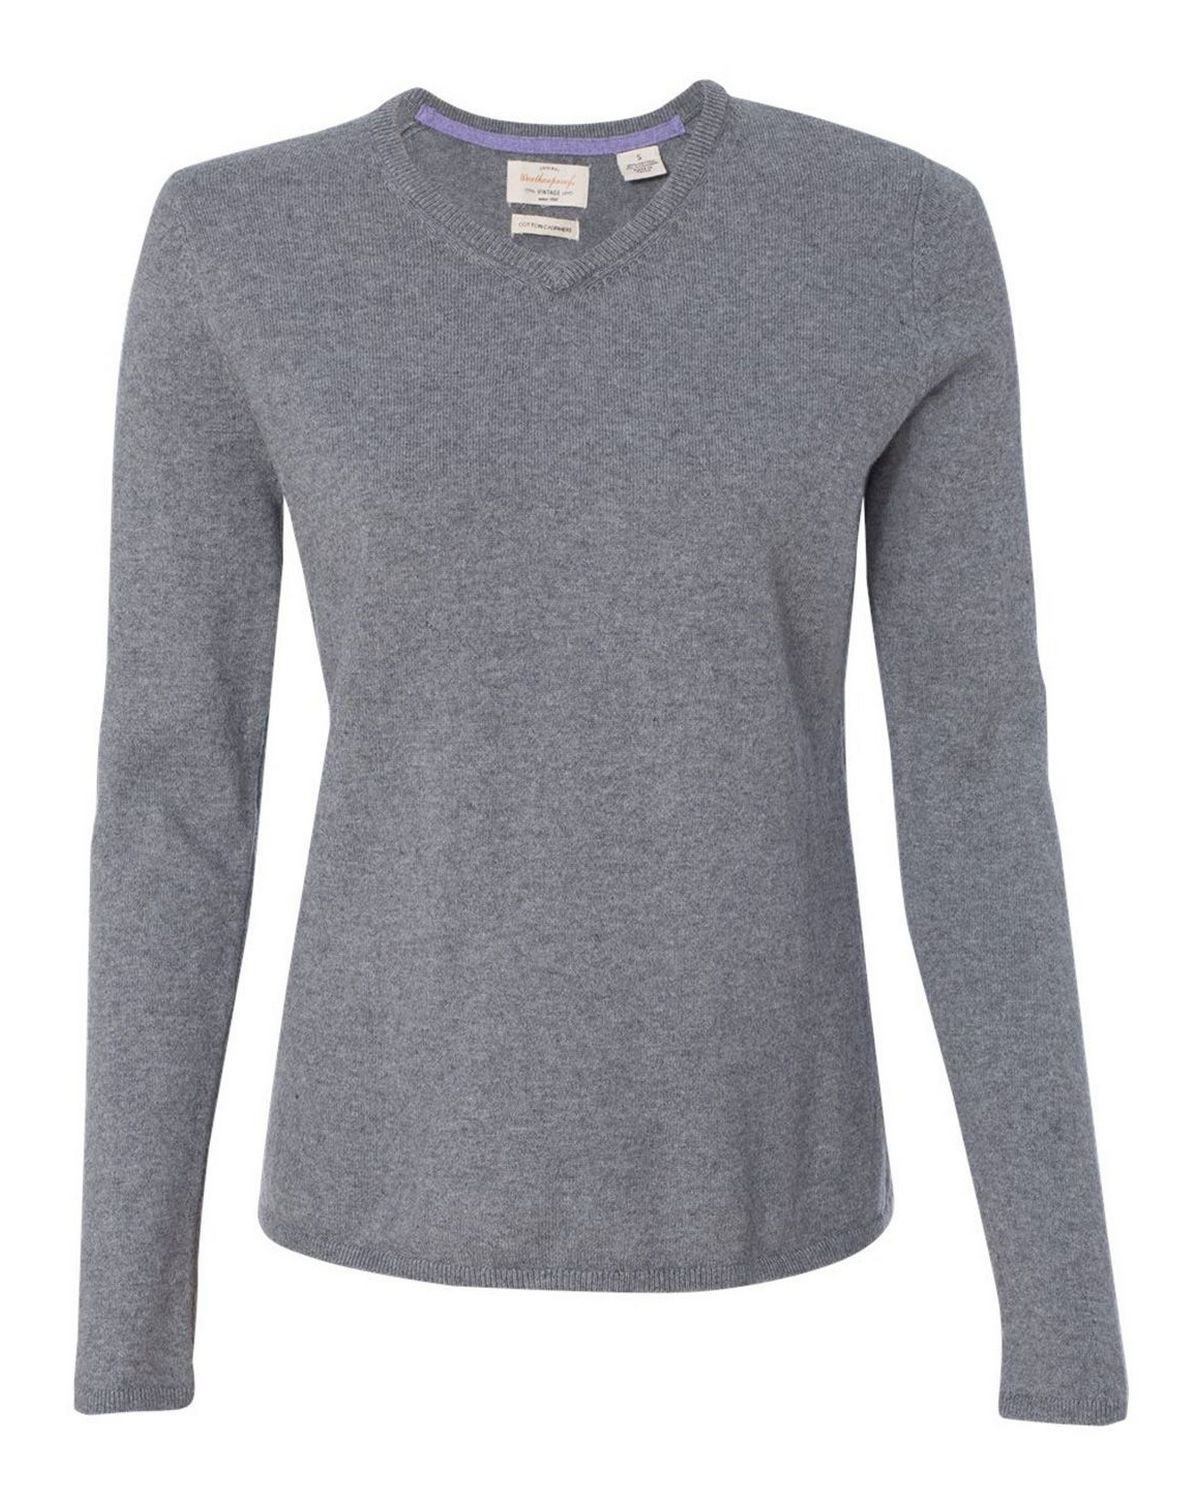 Weatherproof W151363 Women's Vintage Cotton Cashmere V-Neck Sweater - Medium Grey Heather - S #vintage